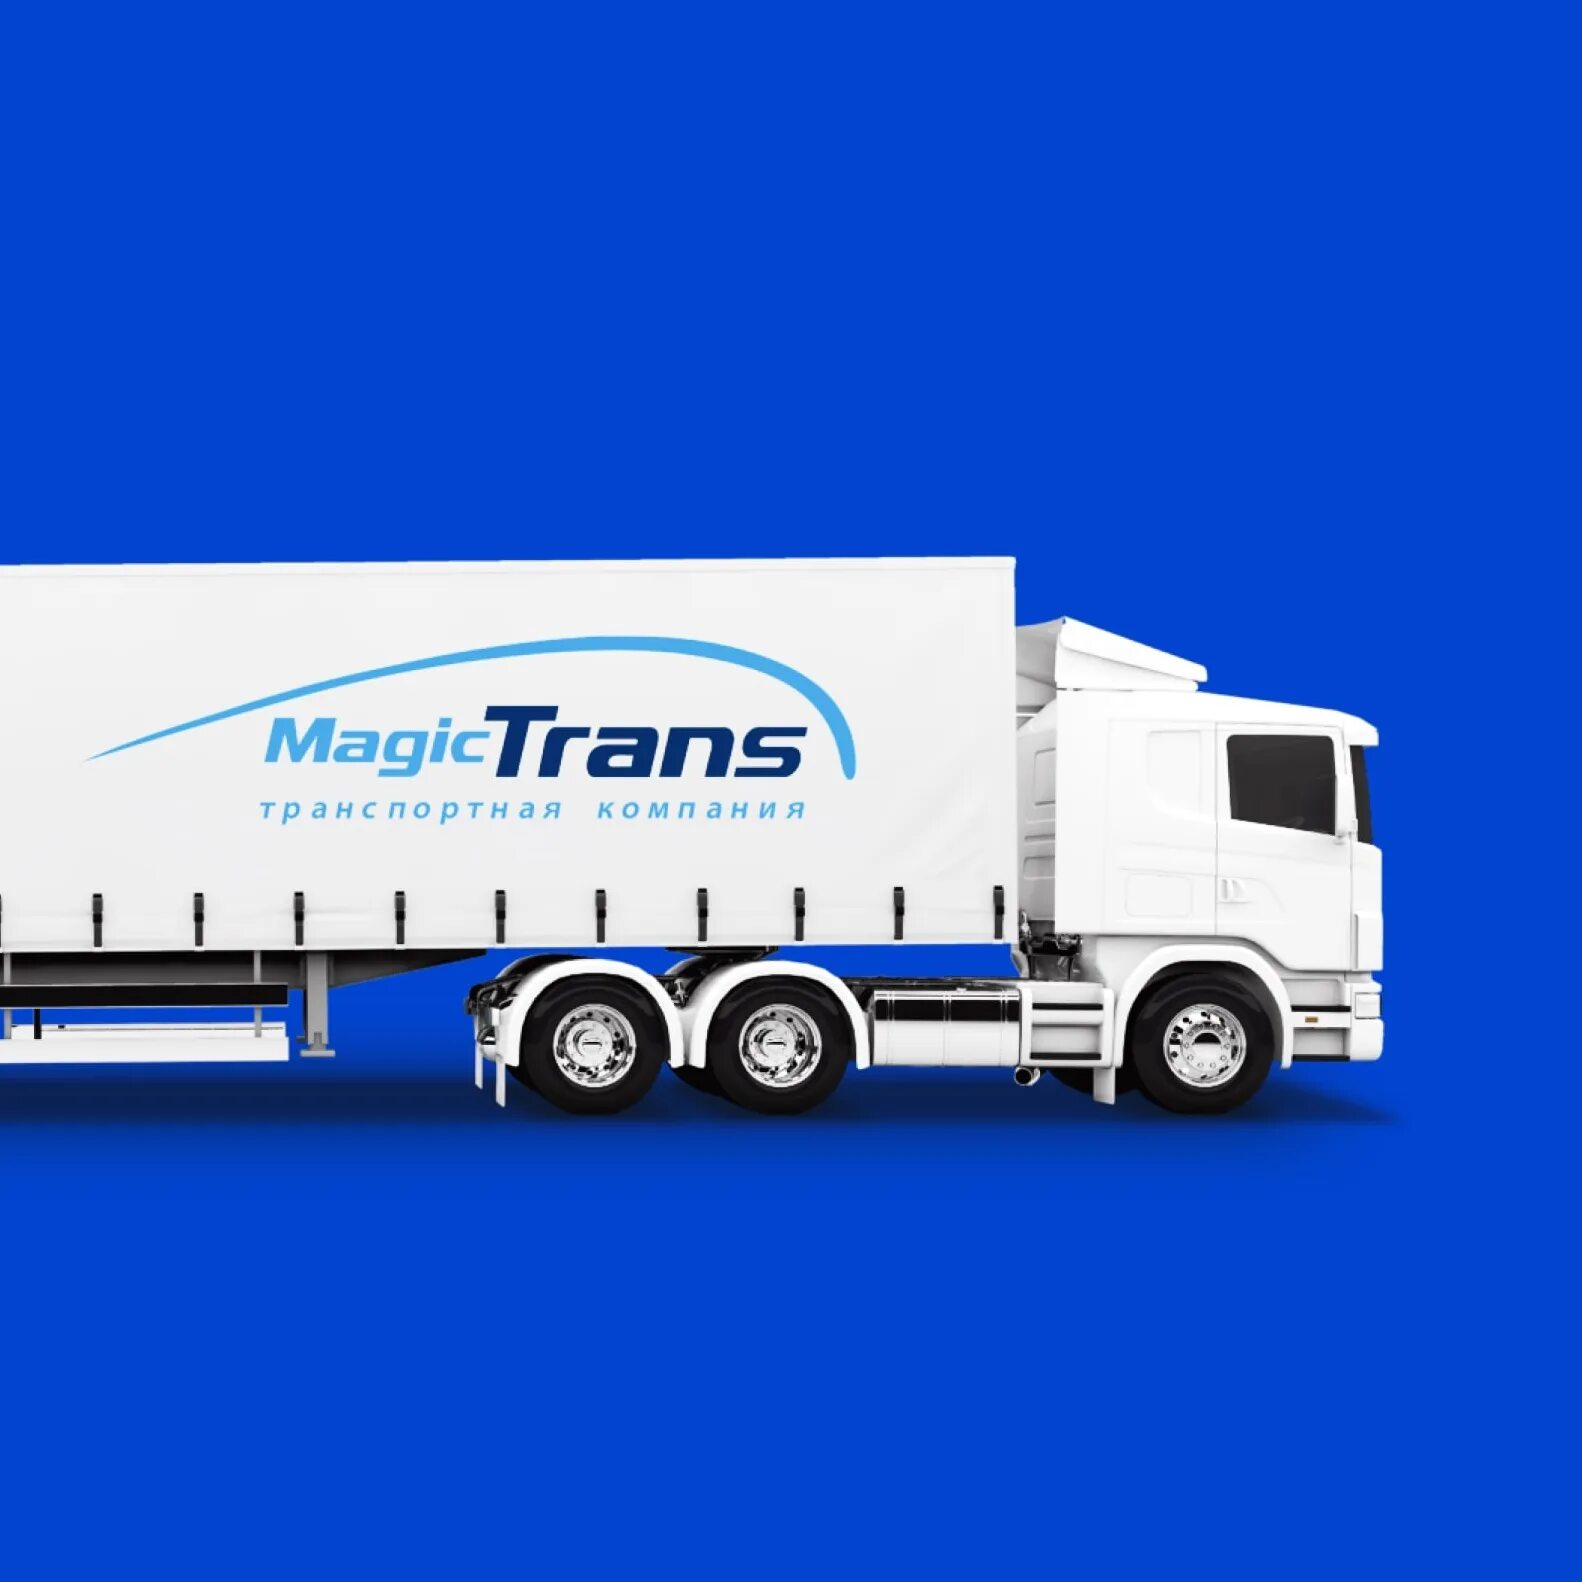 Magic trans транспортная. Транс транспортная компания. Мейджик транс. Magic Trans транспортная компания. Мейджик транс транспортная компания Москва.